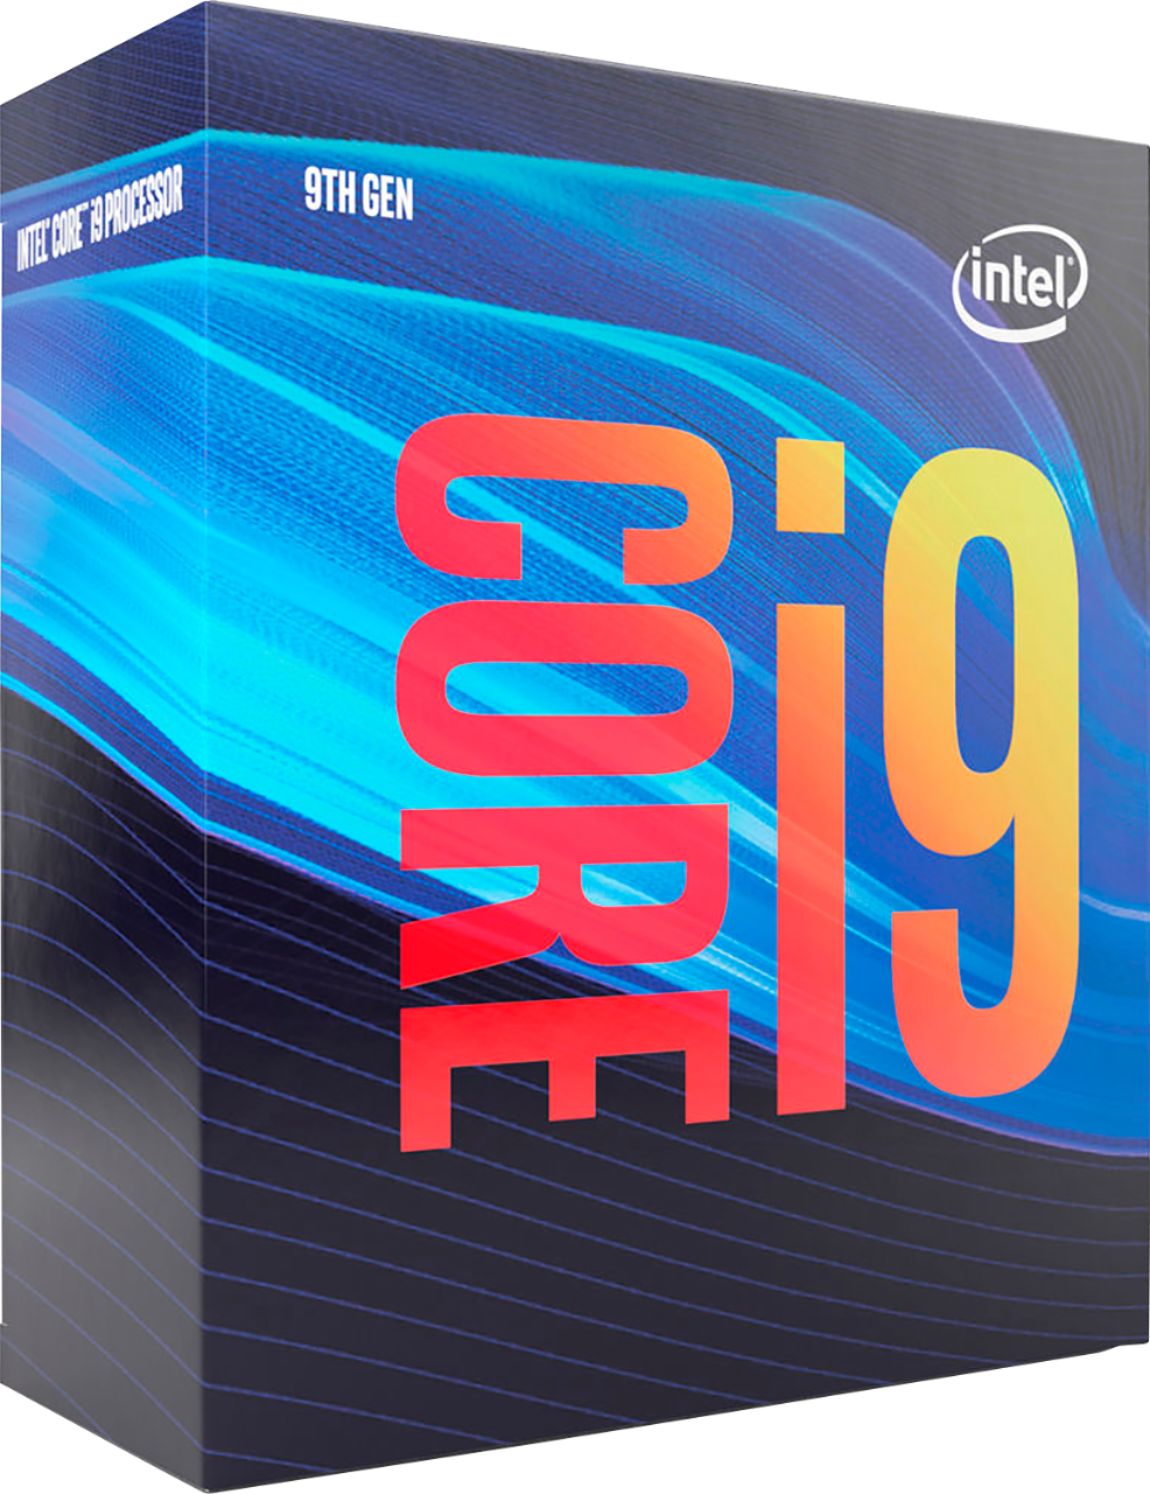 Best Buy: Intel Core i9-9900 9th Generation 8-Core 16-Thread 3.1